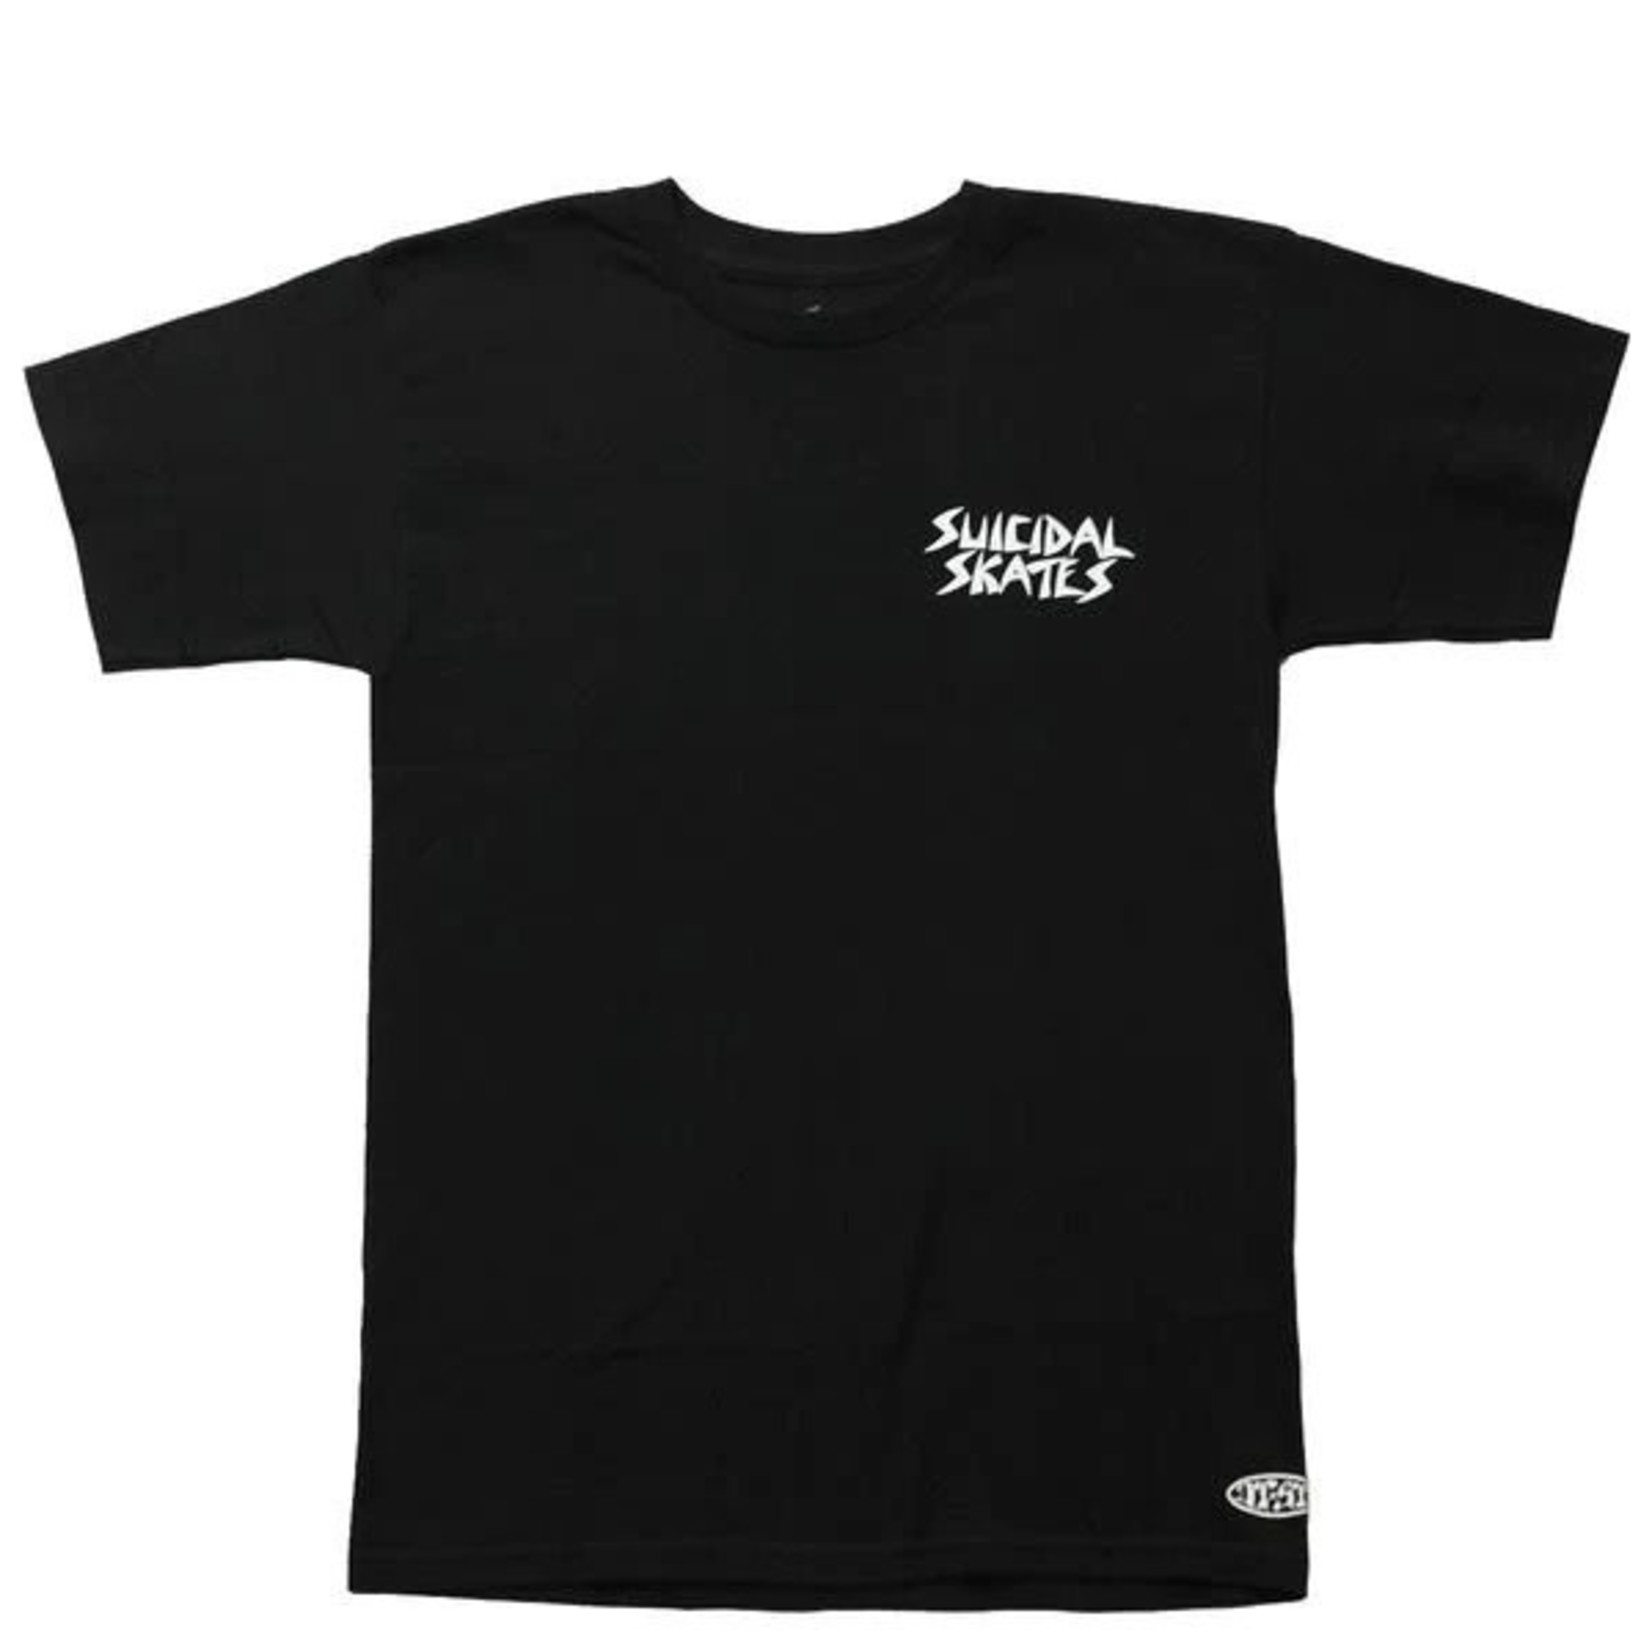 Suicidal Skates Suicidal Skates Possessed to Skate T-Shirt - Black